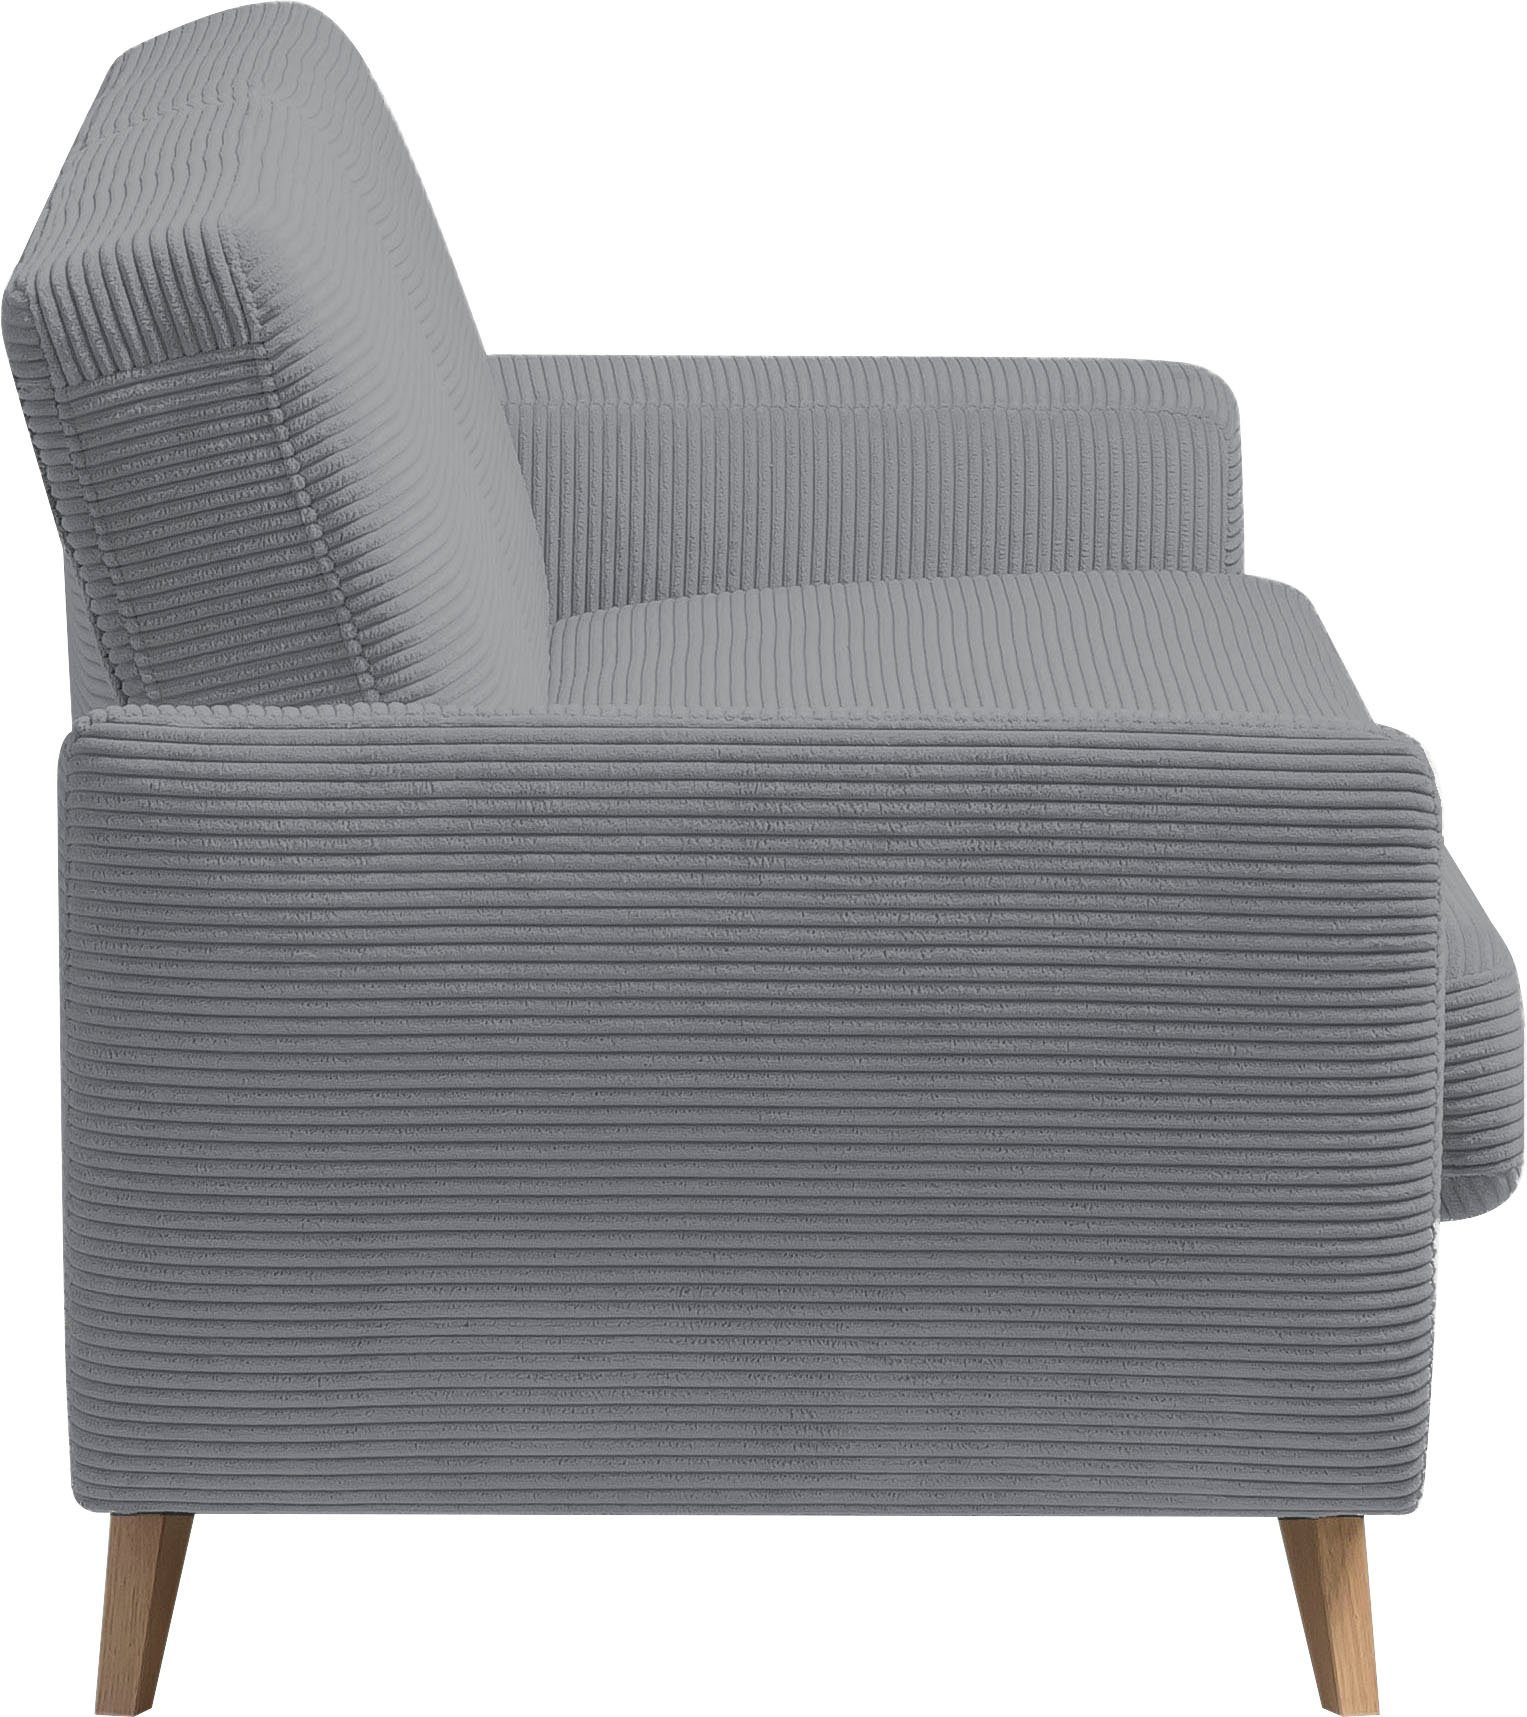 Inklusive Bettkasten Bettfunktion exxpo fashion sofa grey 3-Sitzer - und Samso,